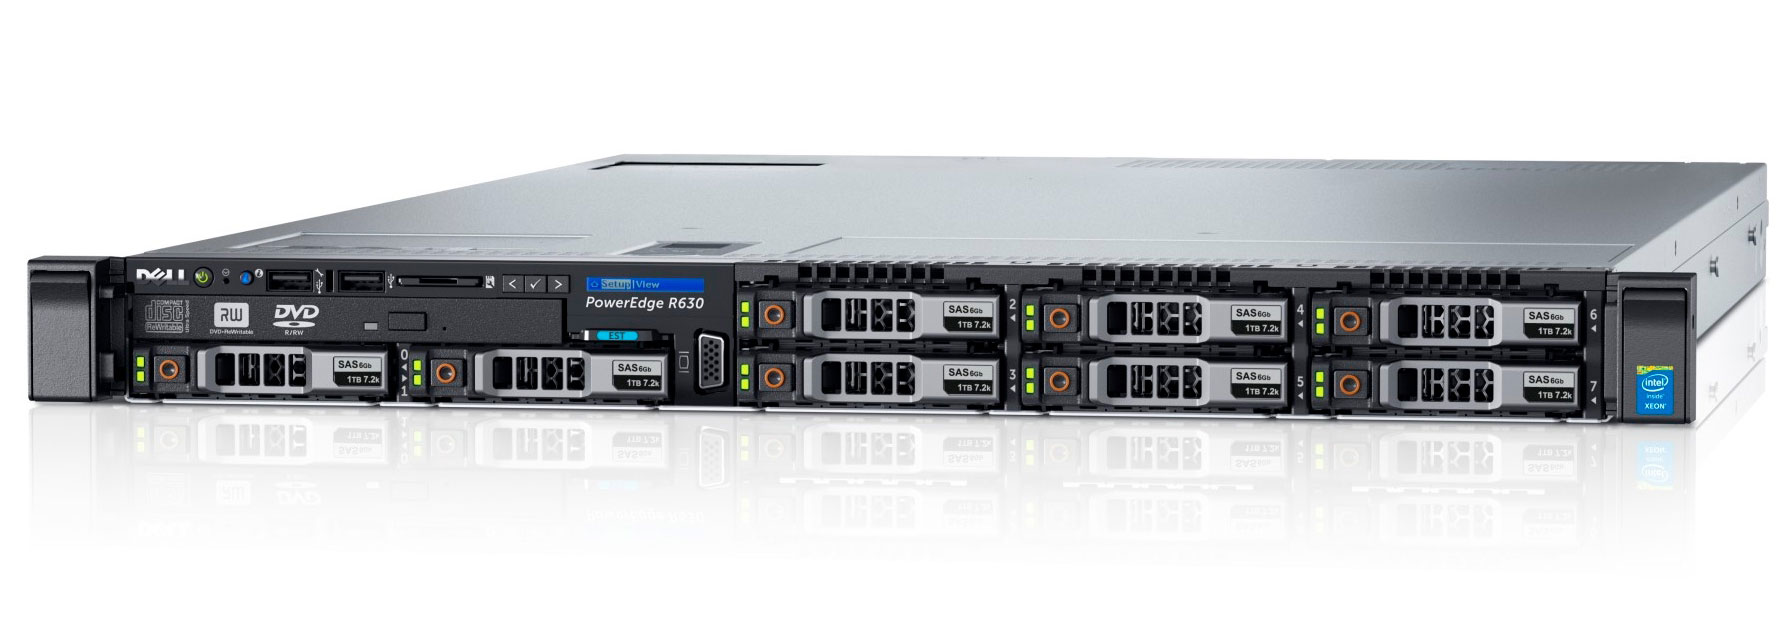 Подробное фото Сервер DELL PowerEdge R630 2*Xeon E5-2650v4 256Gb 2133P DDR4 8x noHDD 2.5", SAS RAID Perc H730, 1024Mb, DVD, 2*PSU 750W